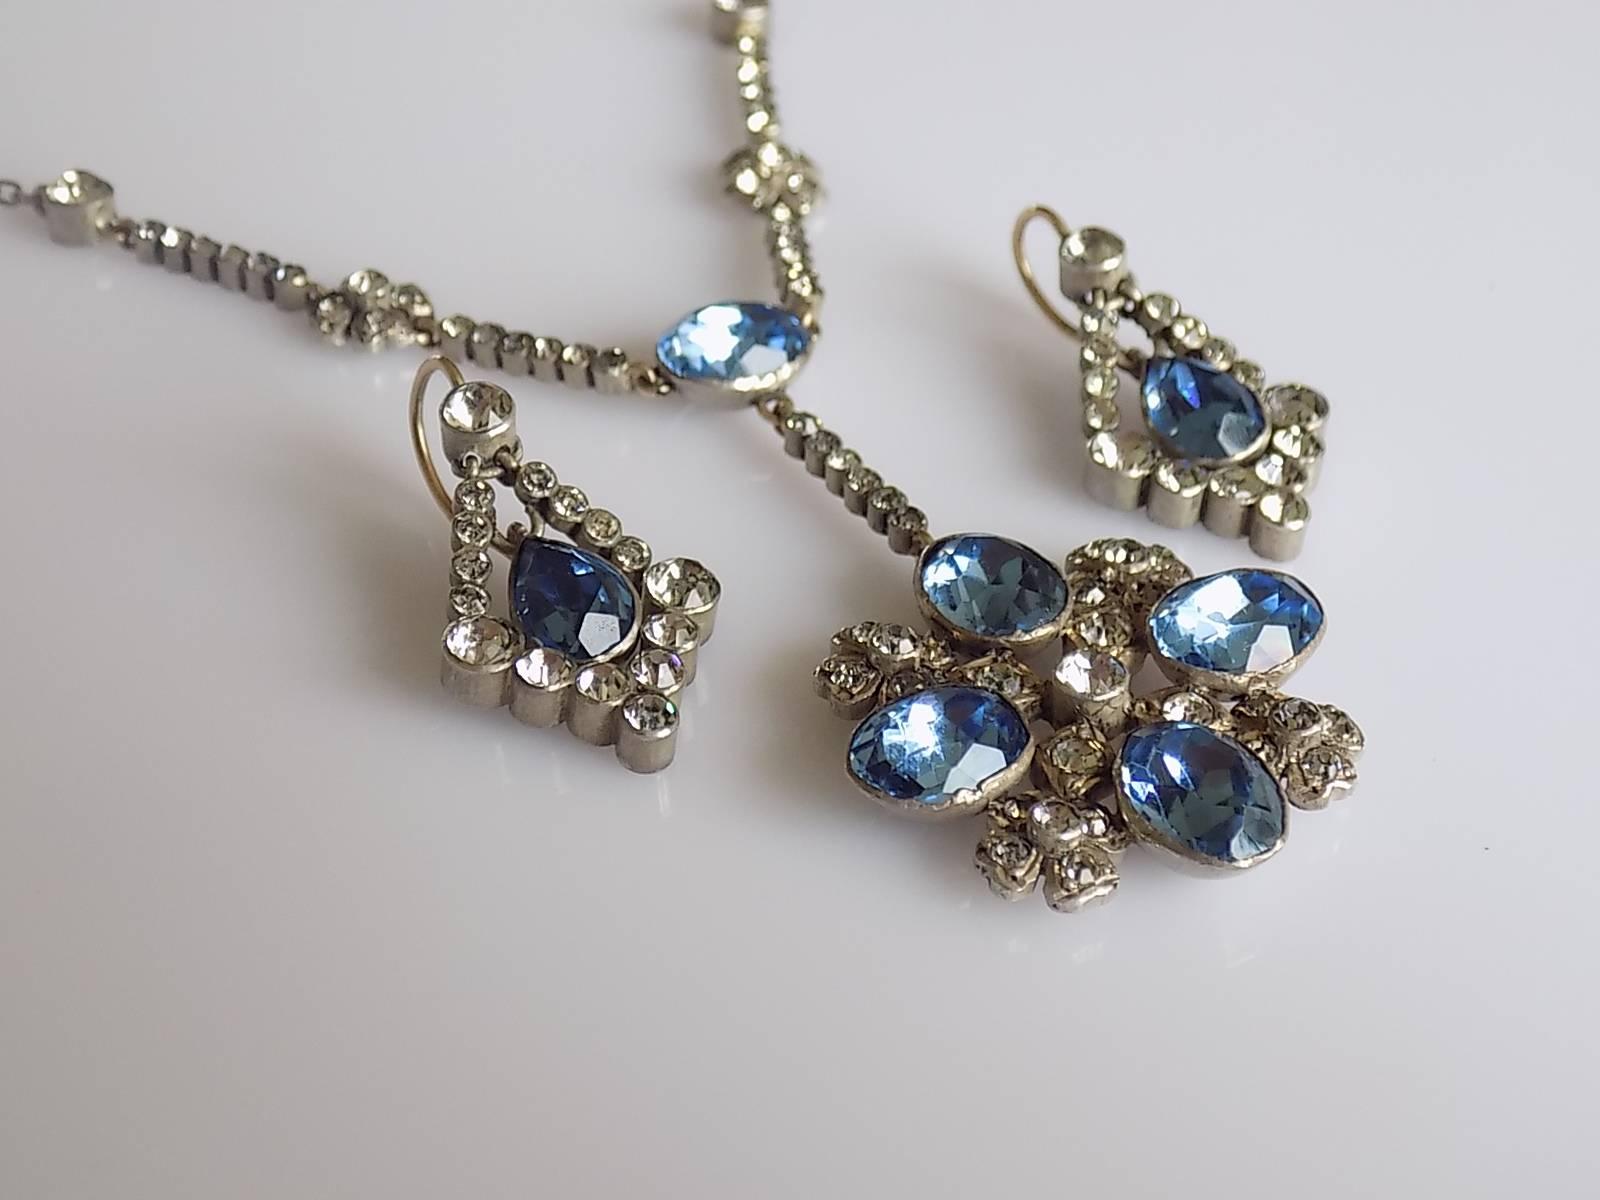 Georgian Antique Edwardian Gold Silver Paste Earrings Necklace Set